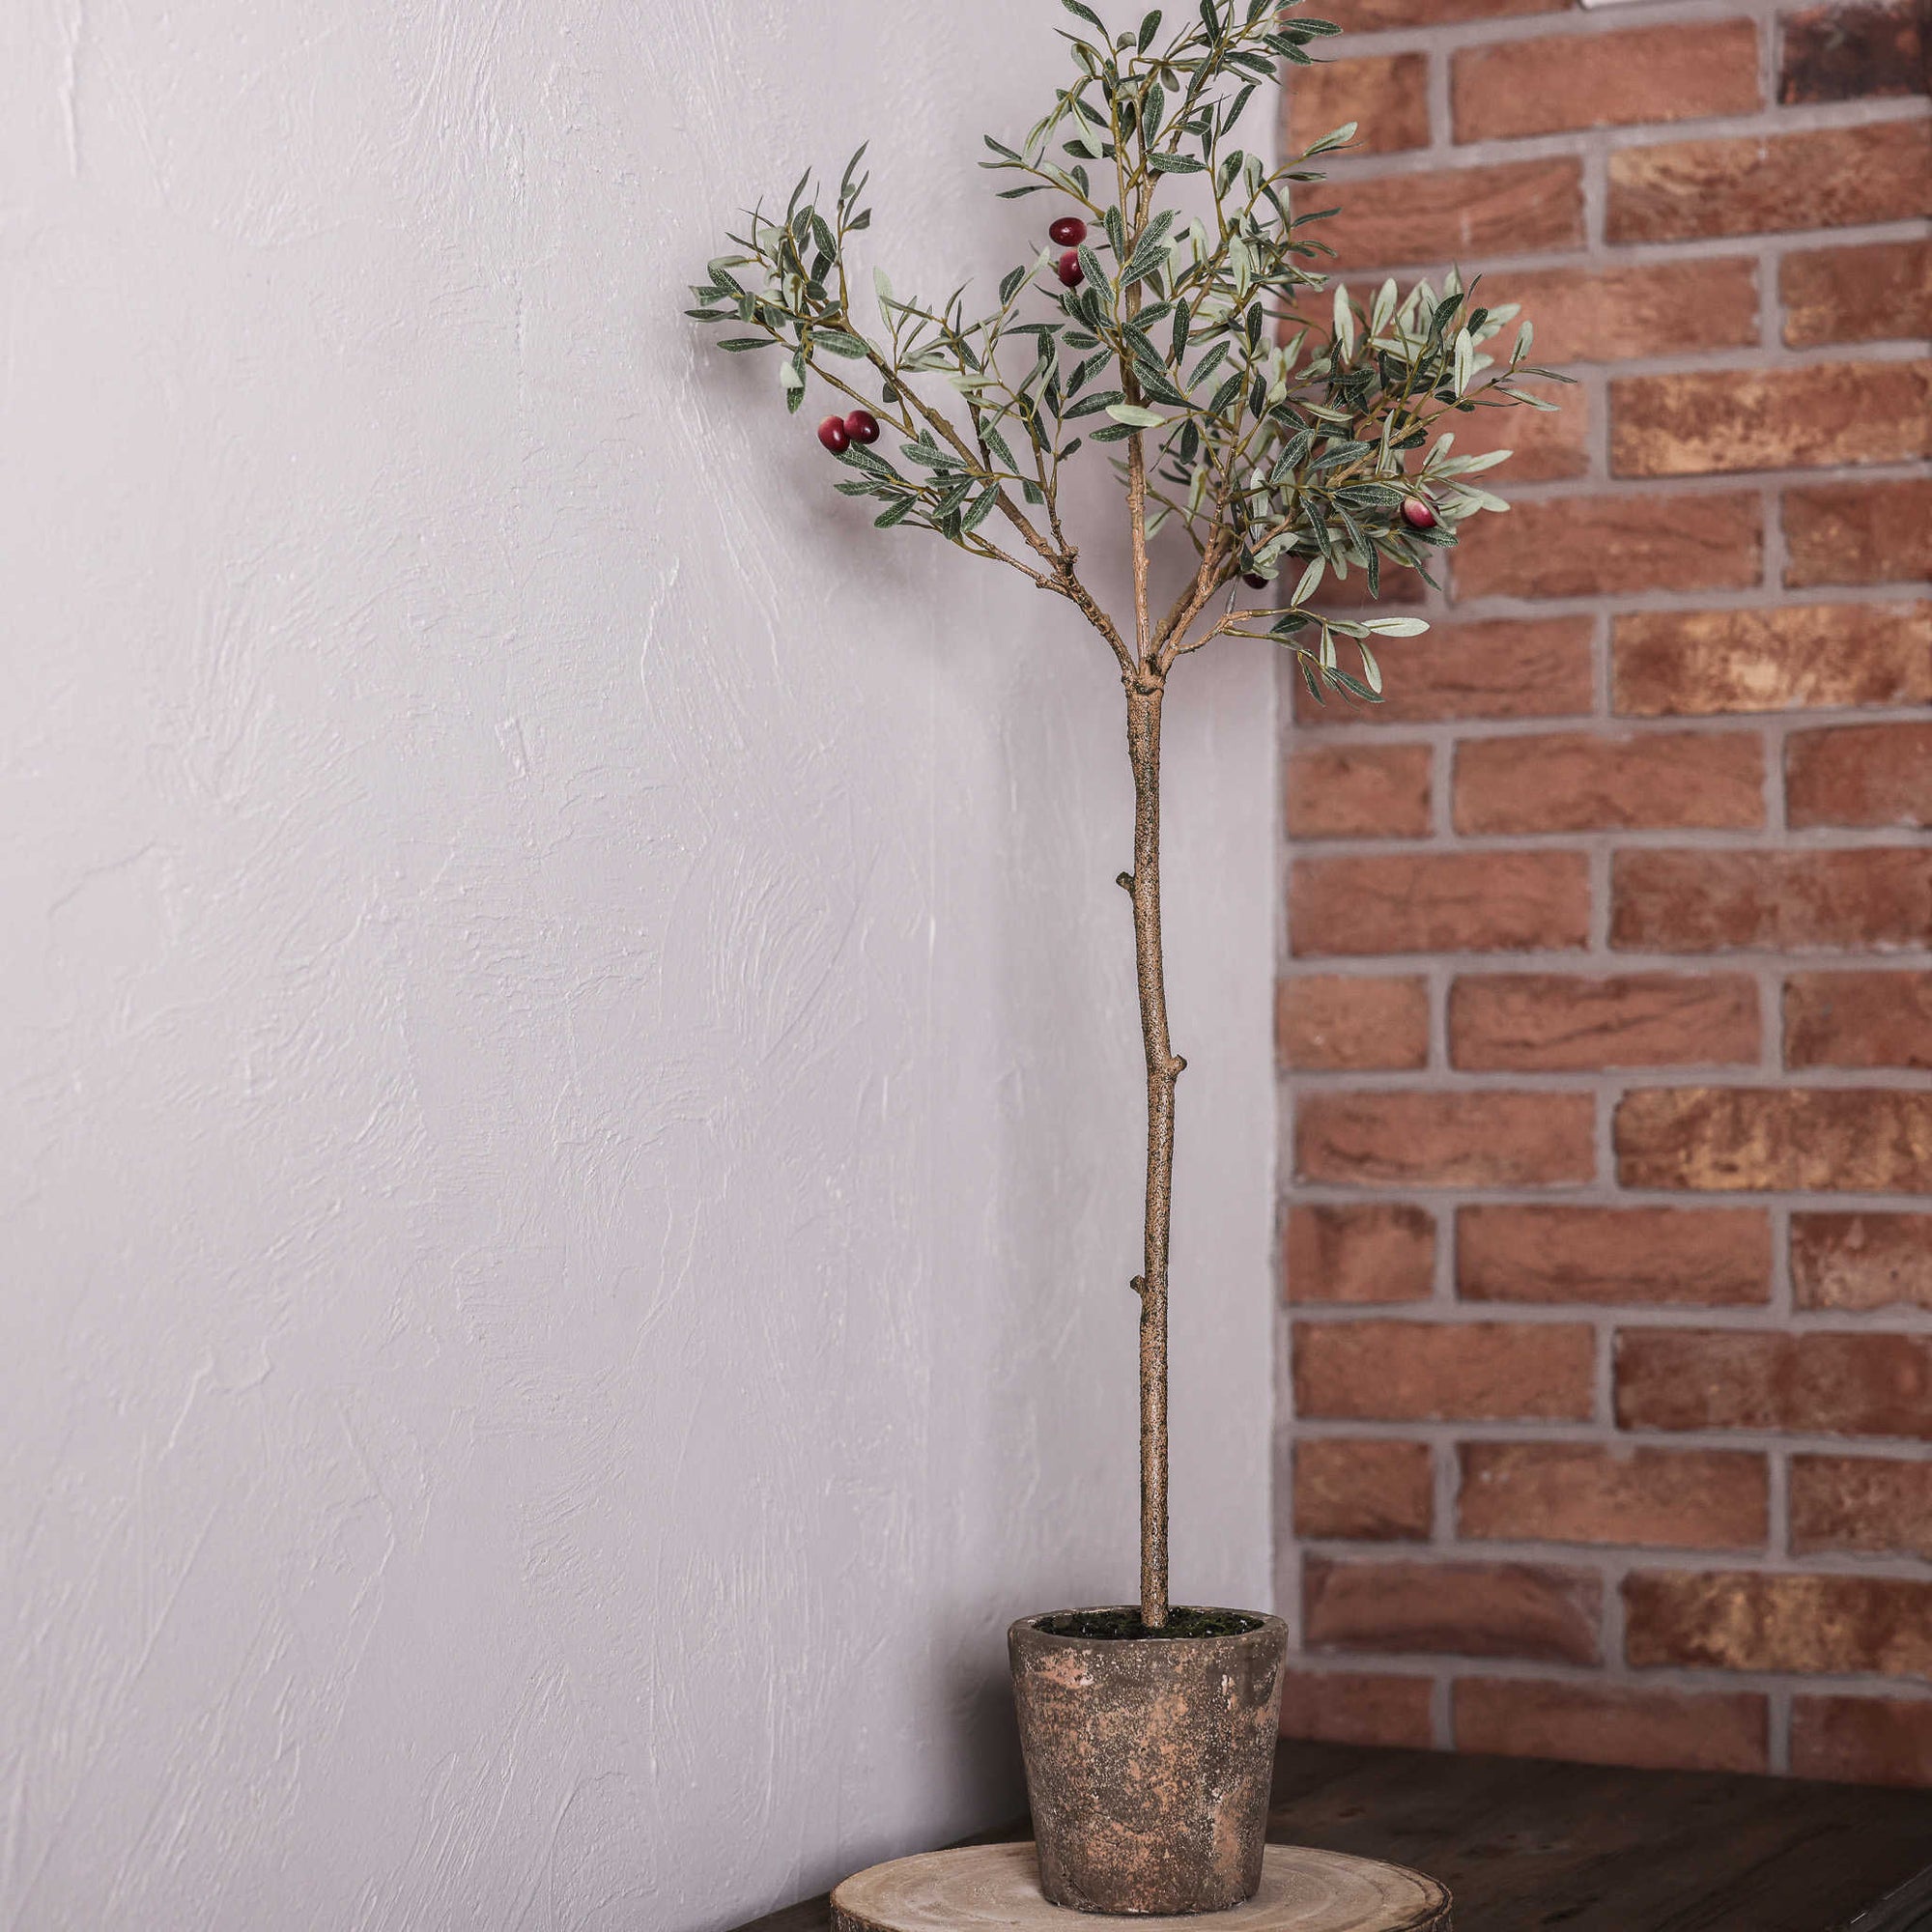 Faux olive tree in clay pot in corner of room.